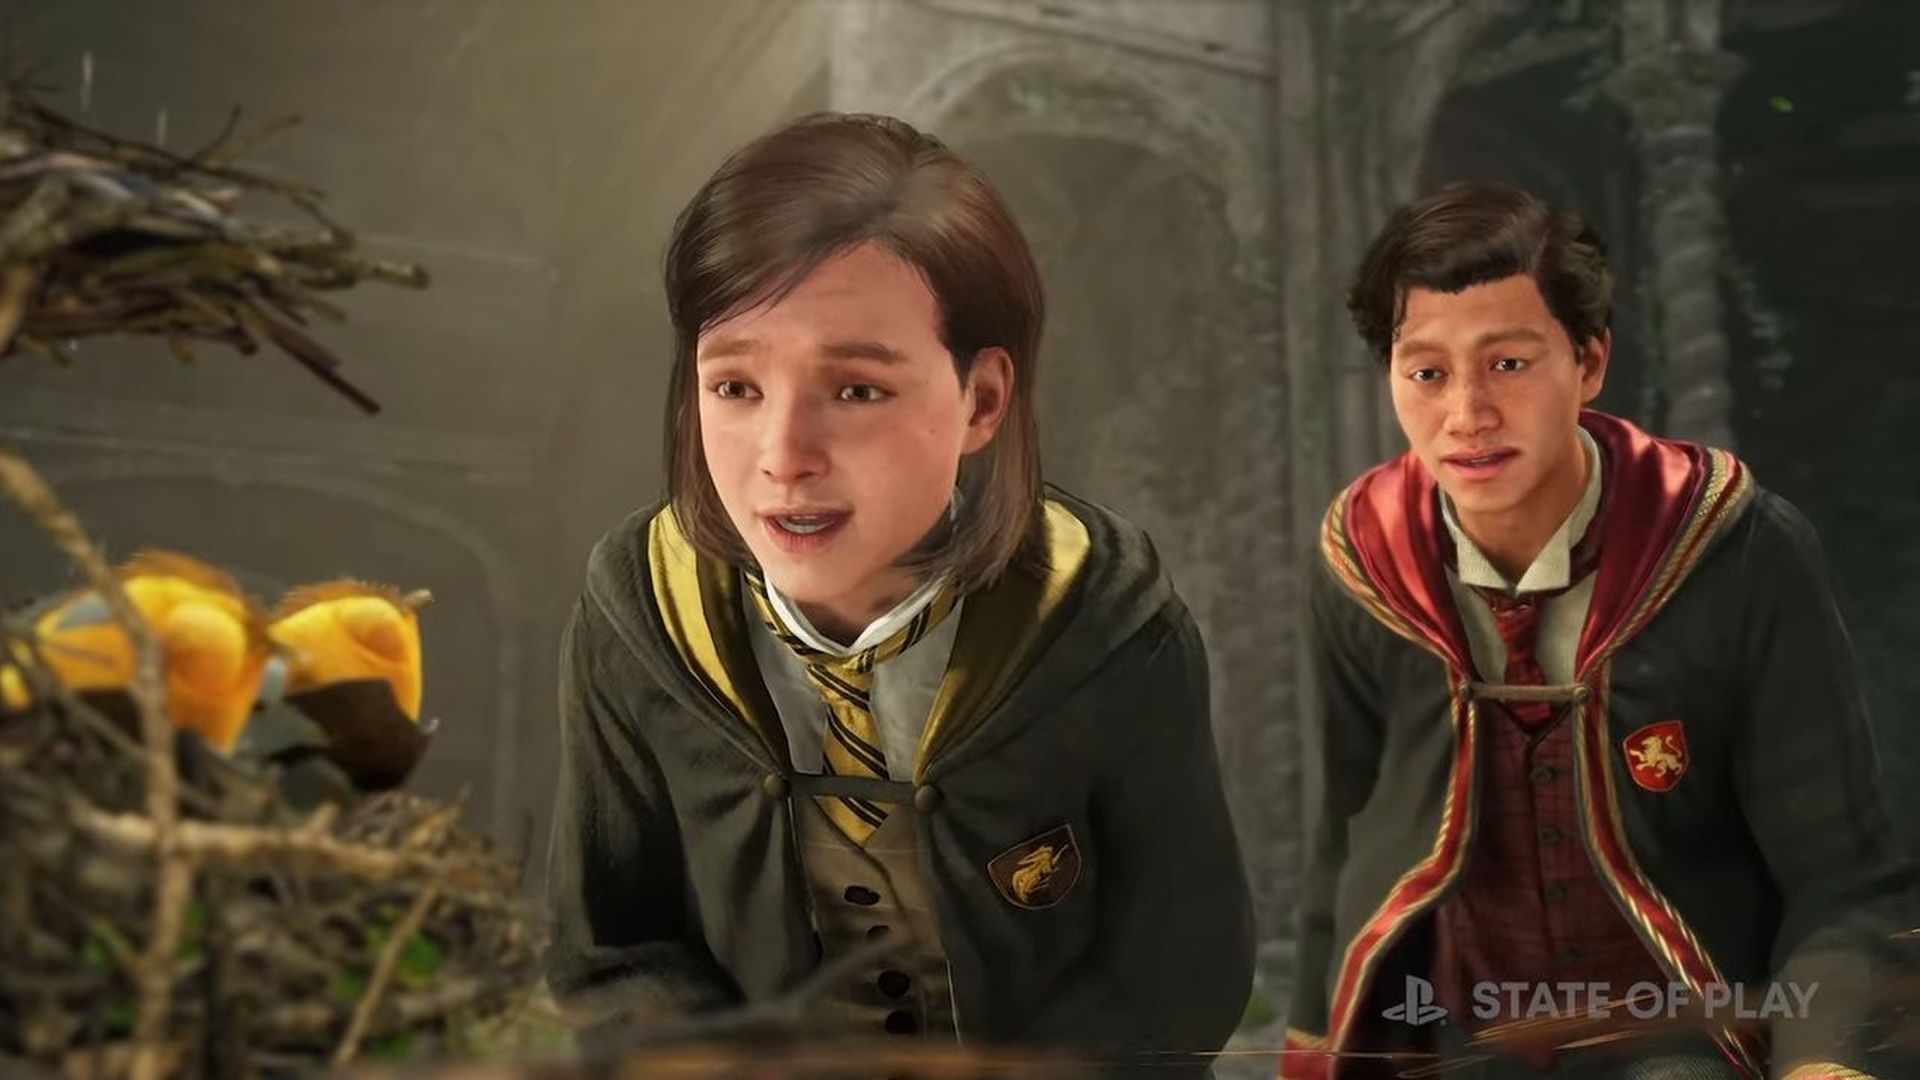 PS5 Games - Hogwarts Legacy